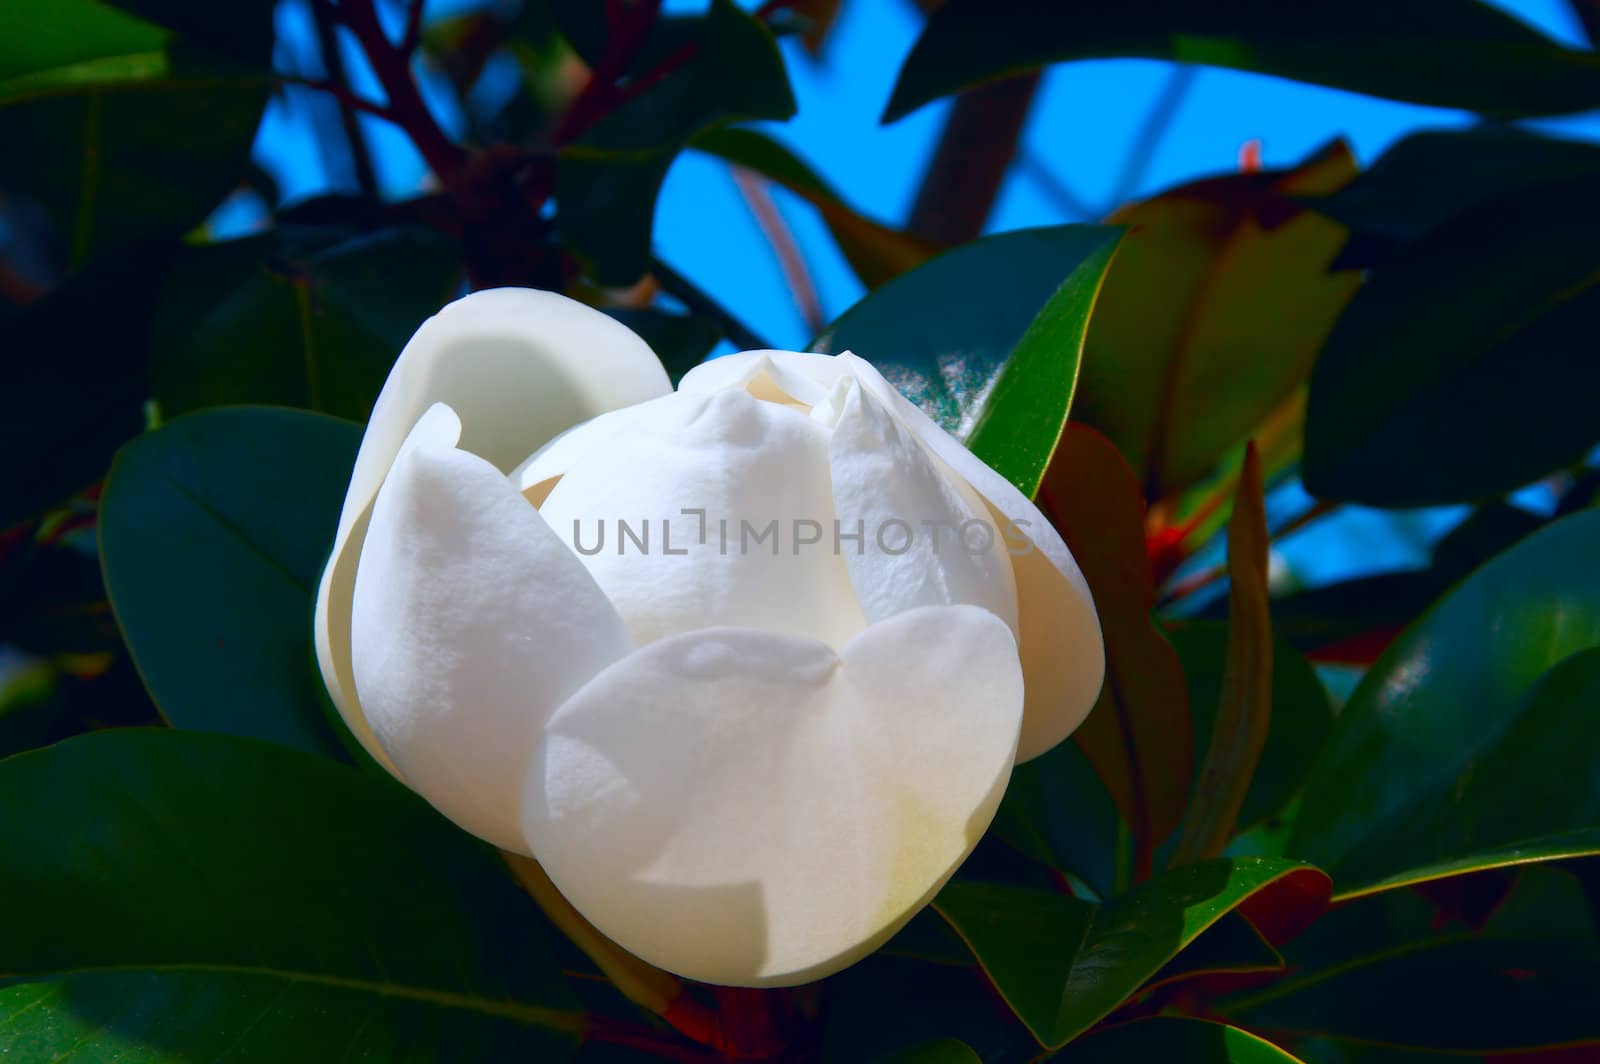 Magnolia by Dominator